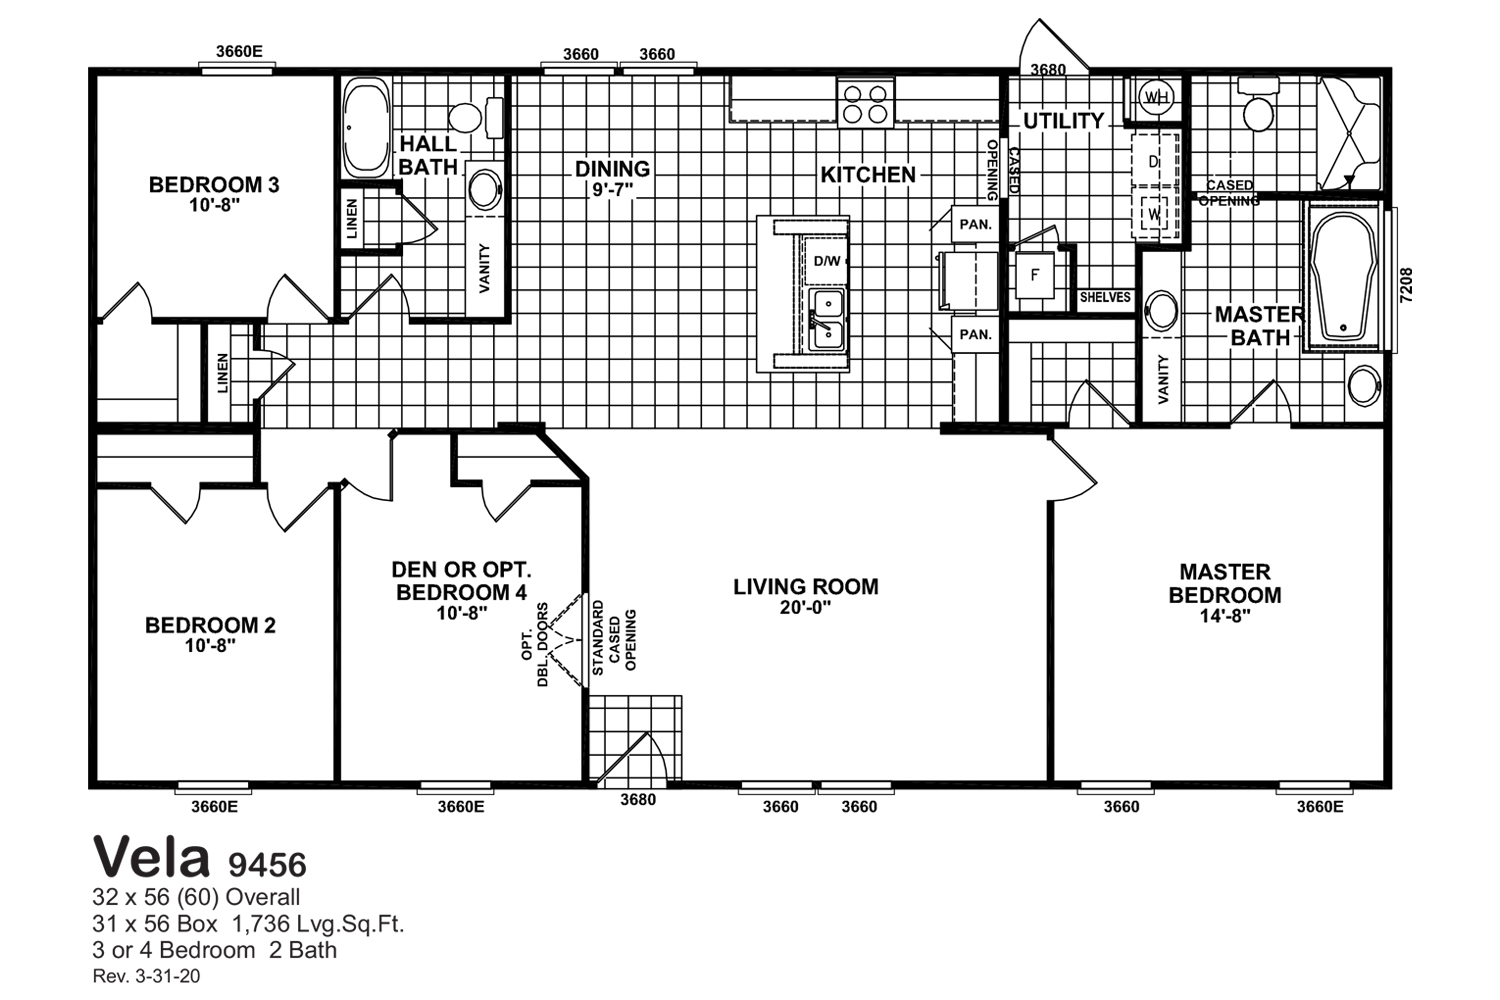 Vela 9456 - Floor plan